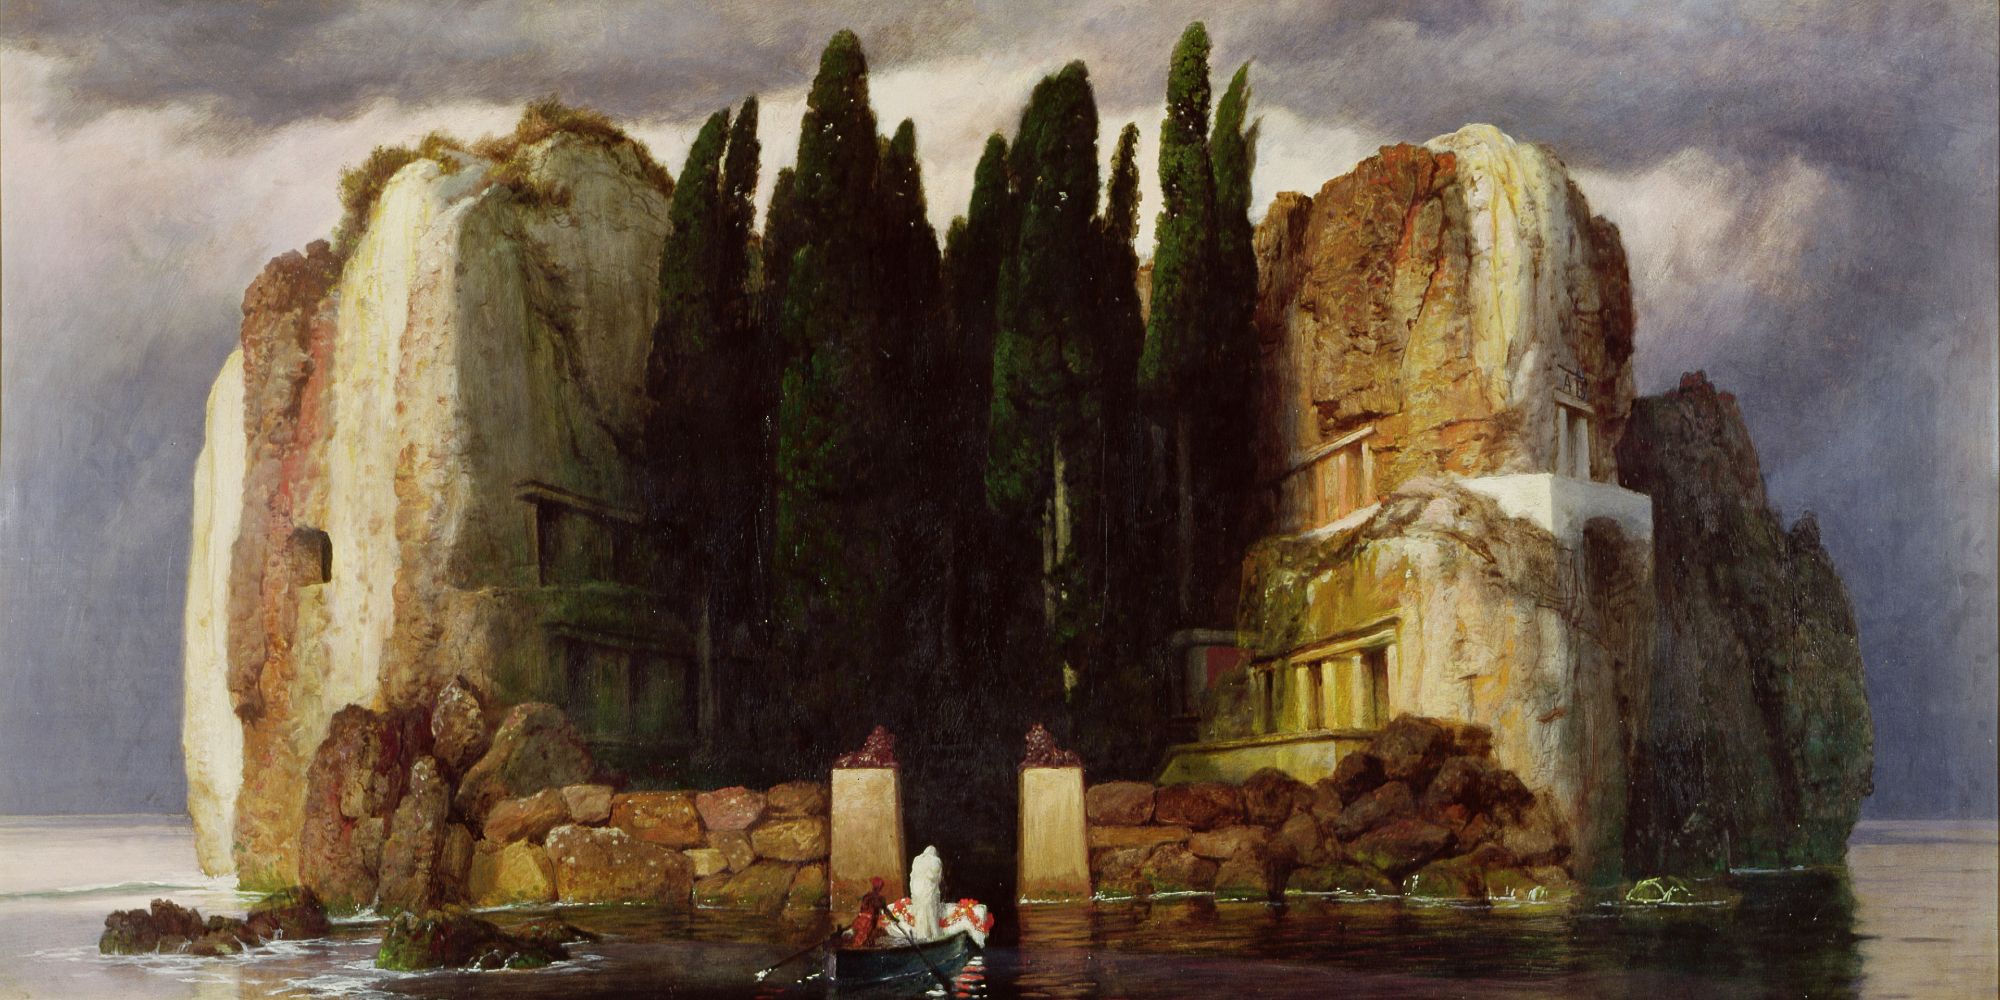 Isle of the Dead by Swiss painter Arnold Böcklin